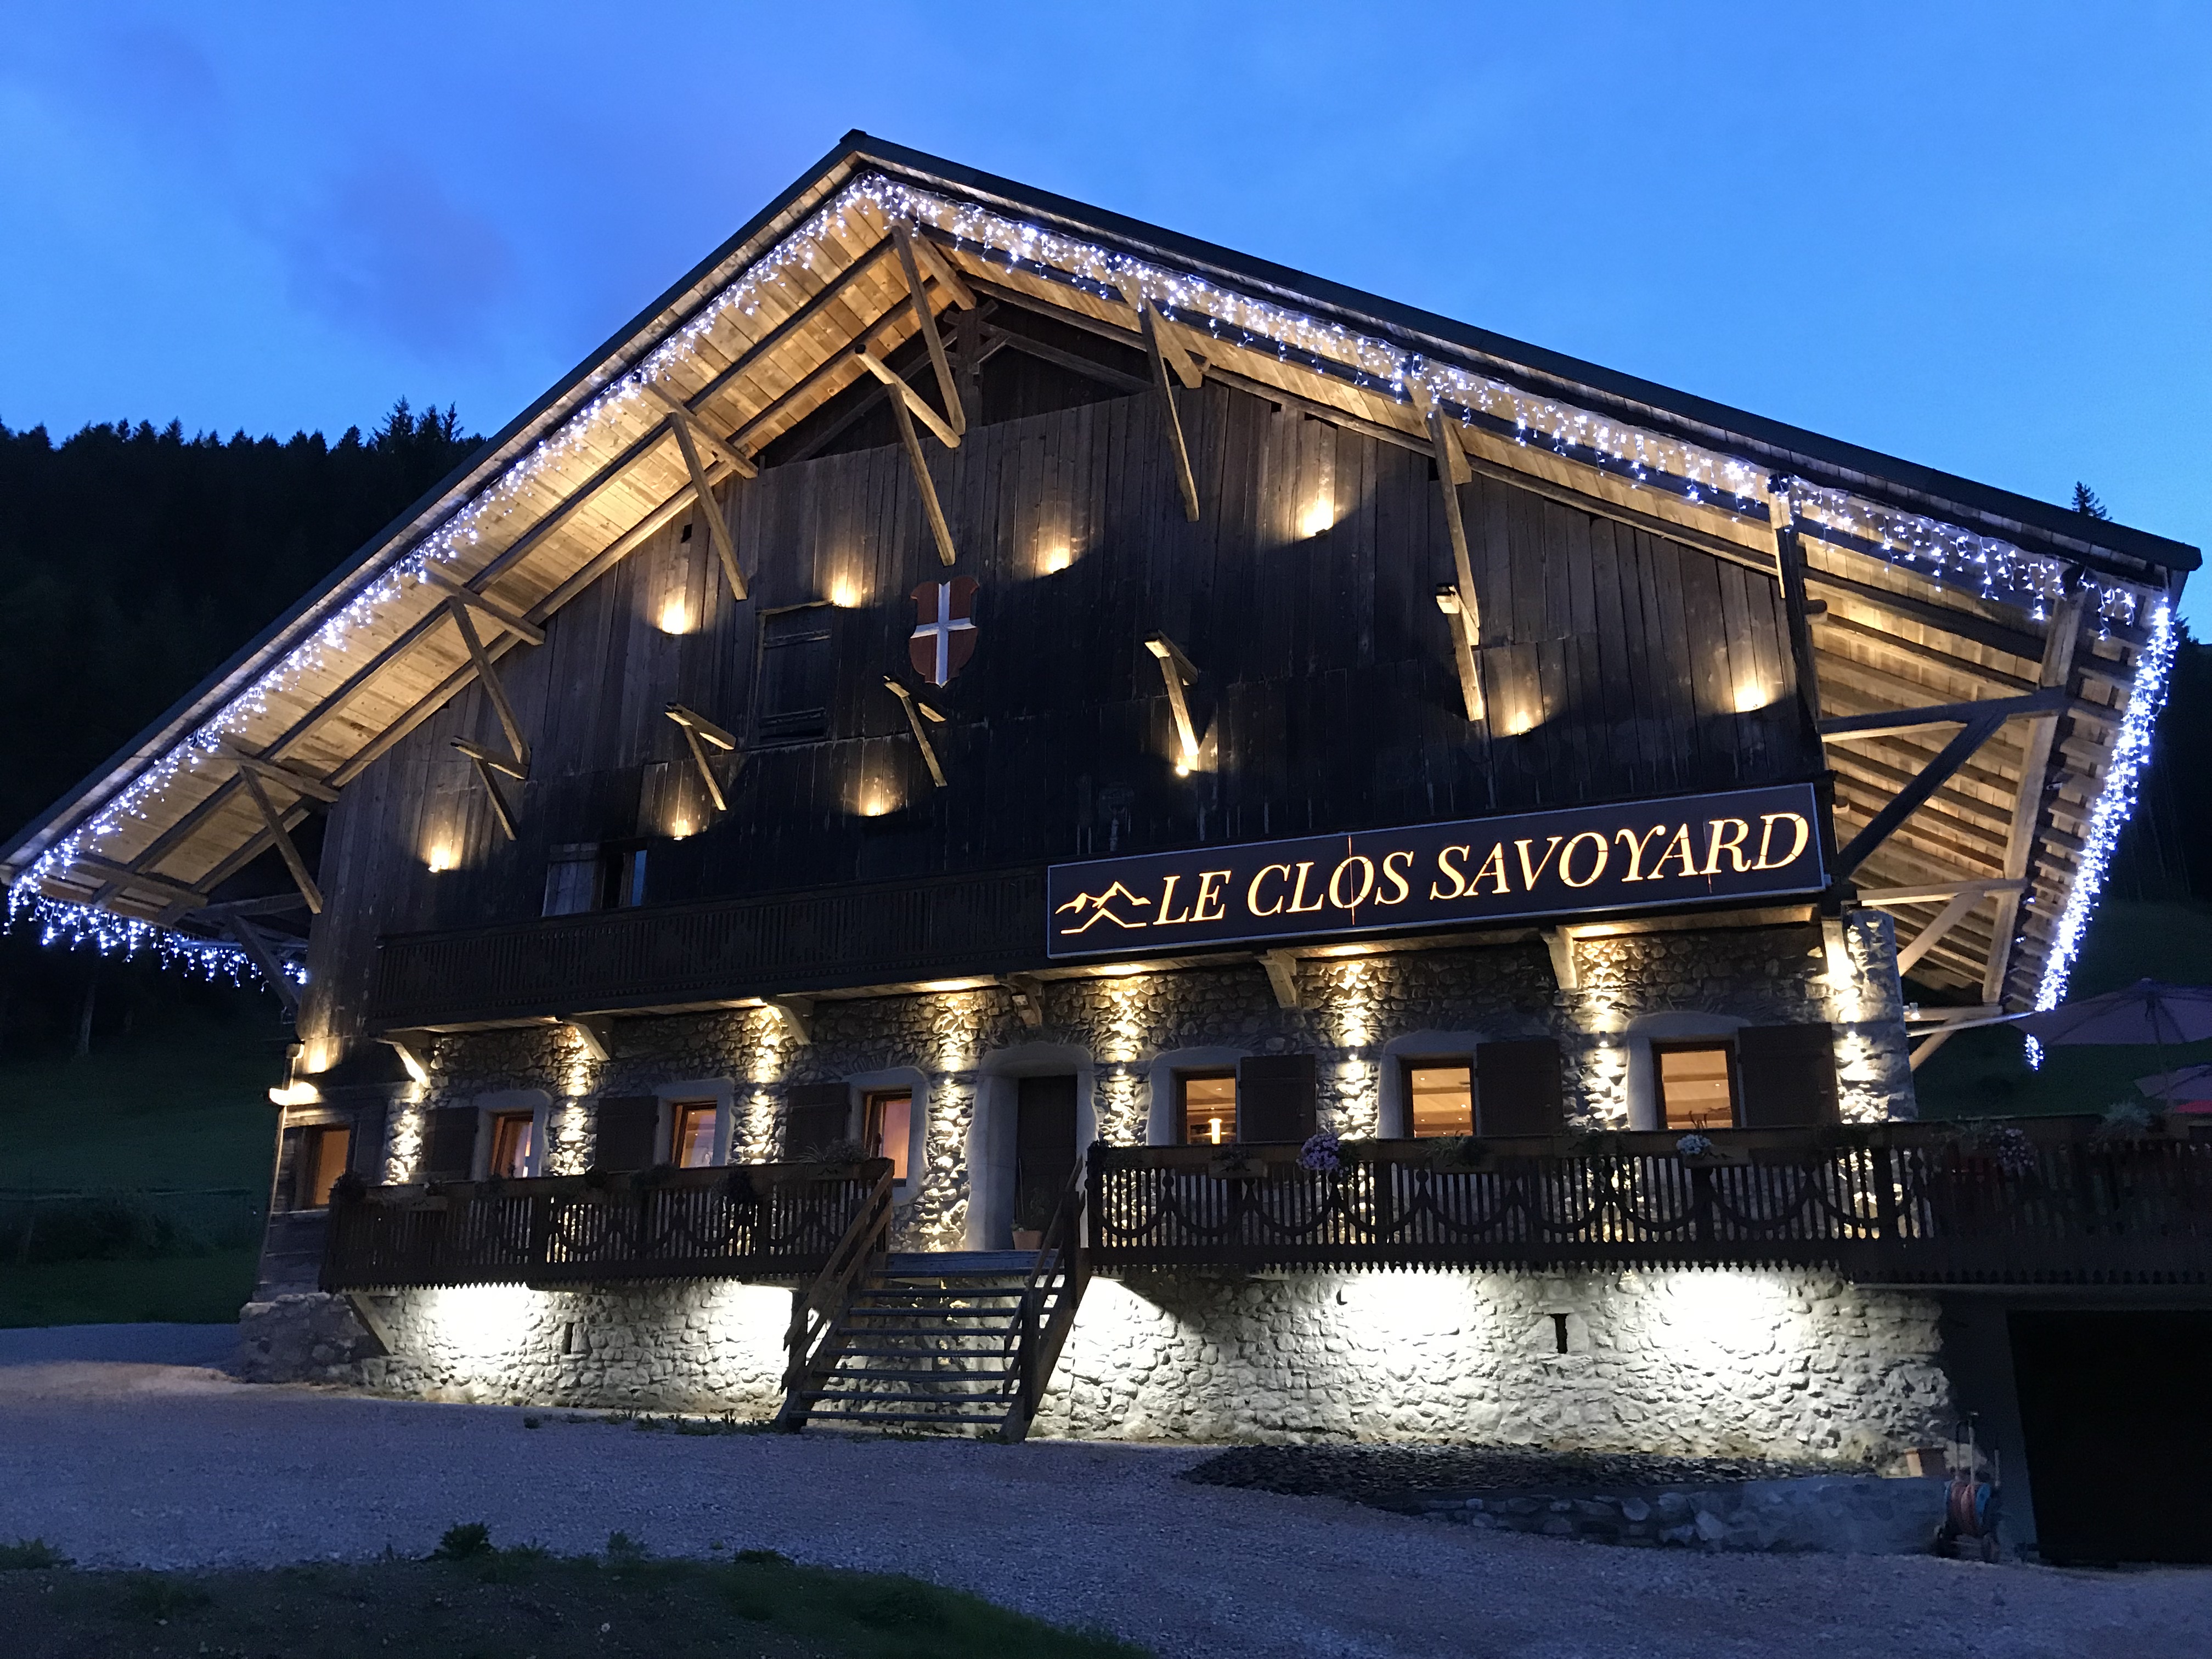 Le Clos Savoyard restaurant